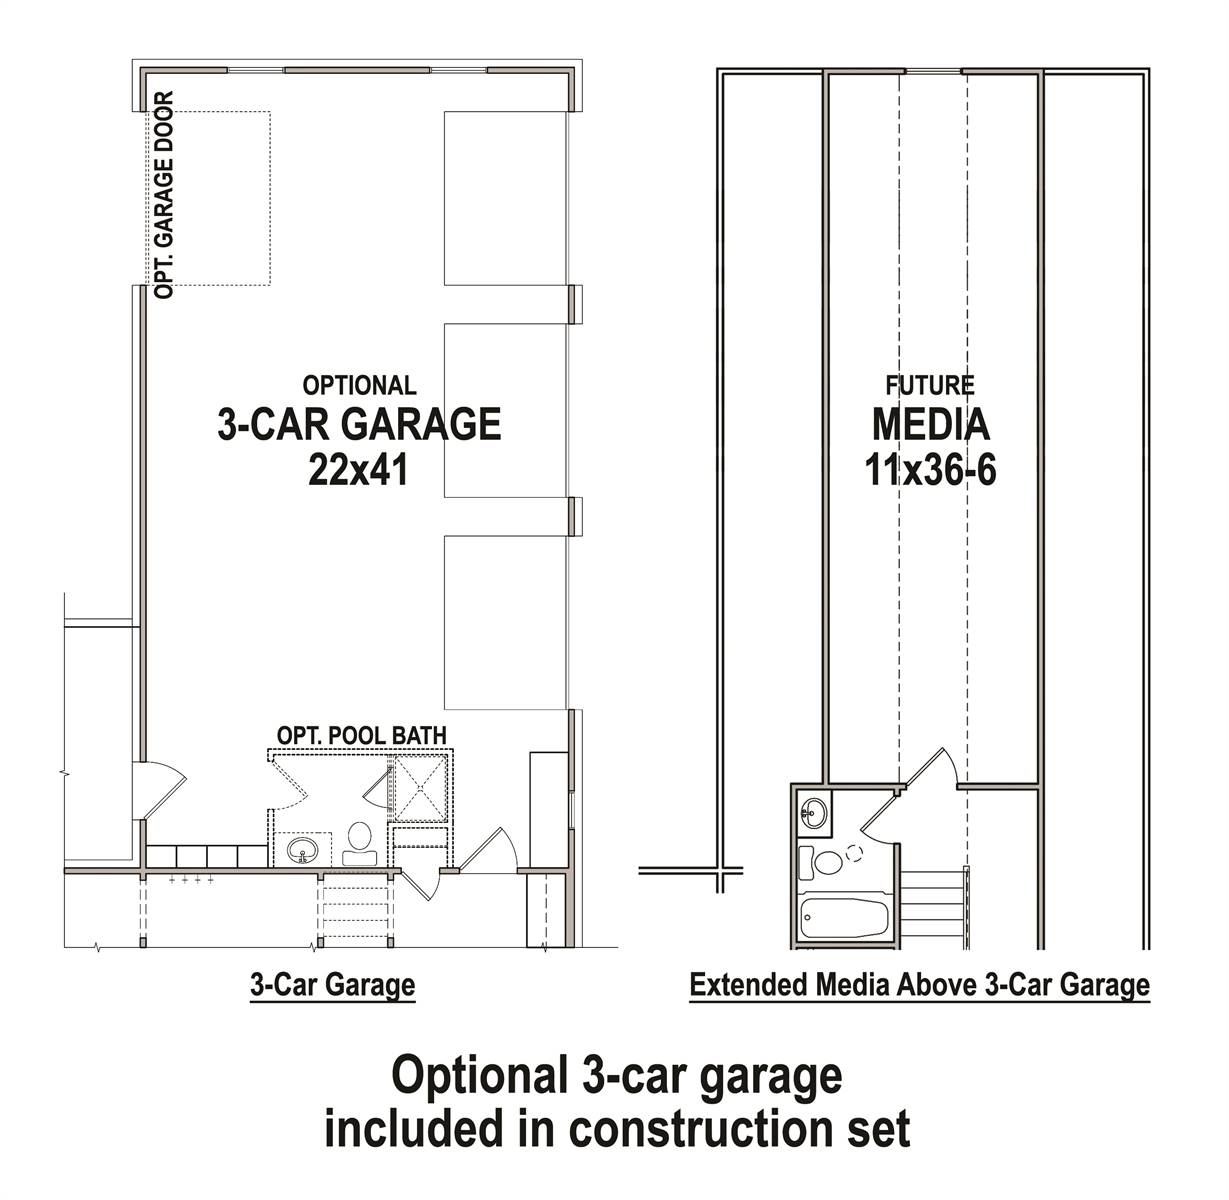 Optional 3-car garage